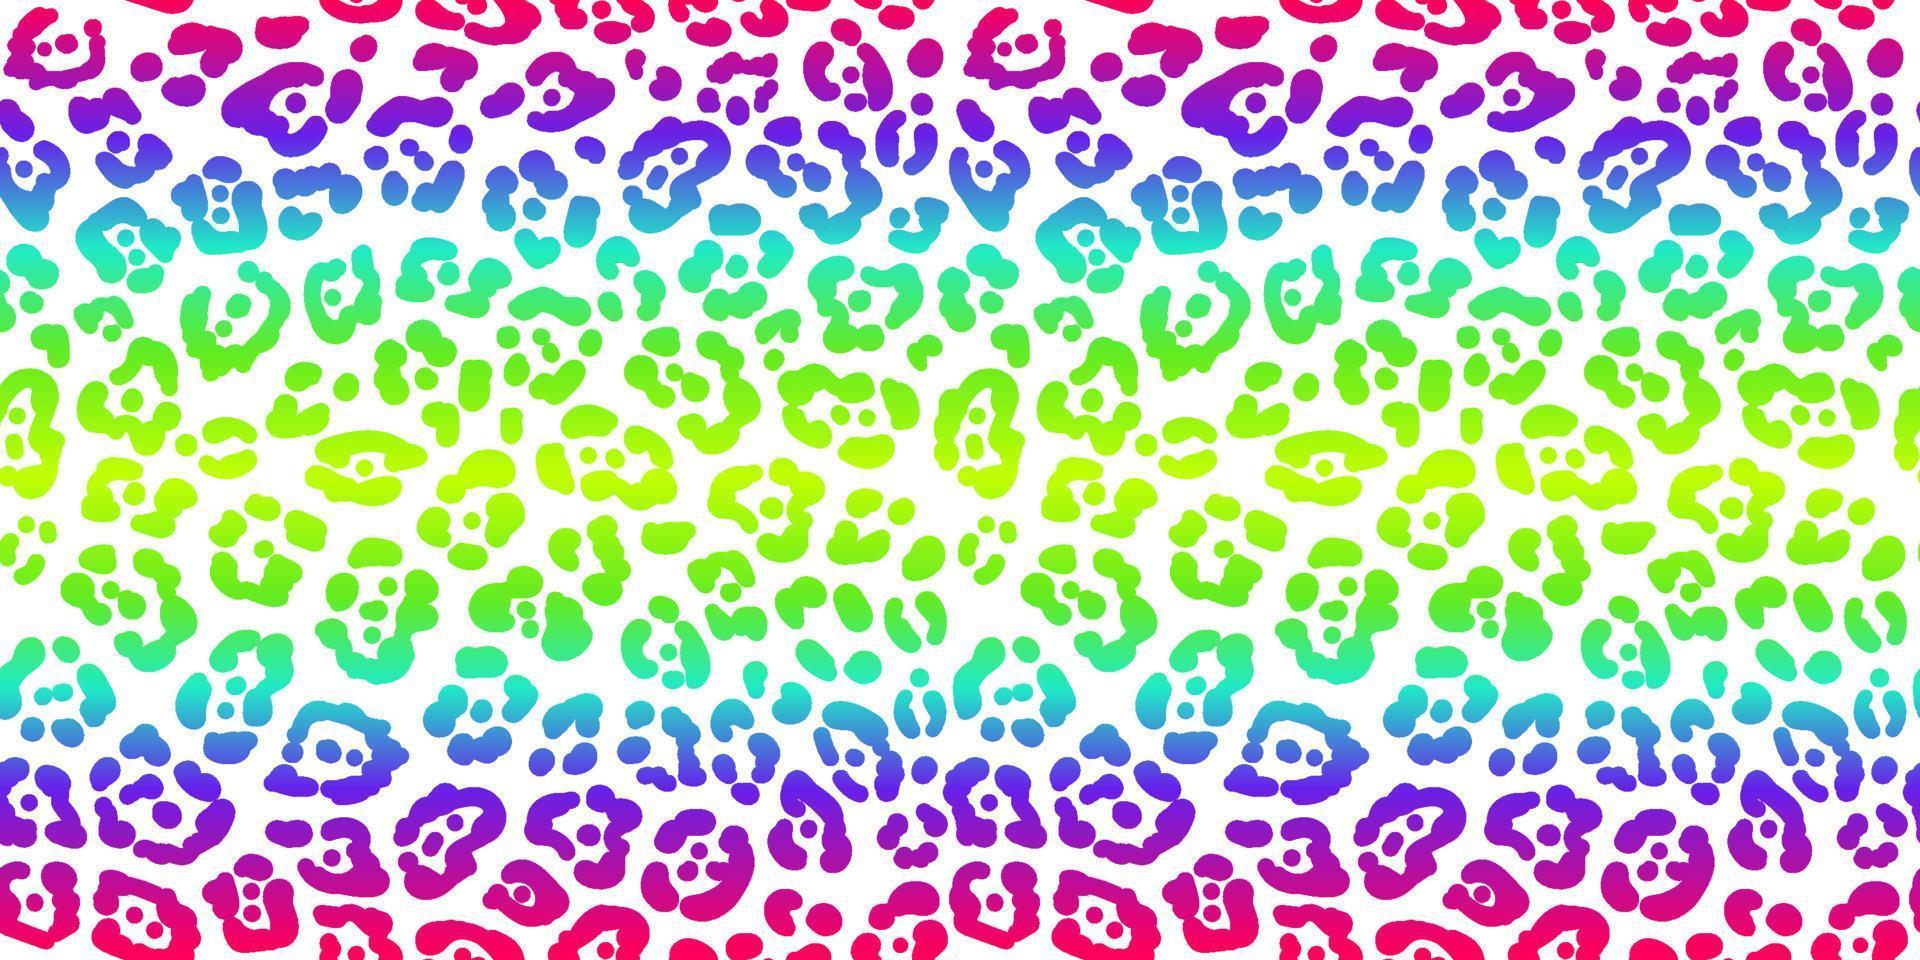 neon luipaard naadloos patroon. regenboogkleurige gevlekte achtergrond. vector dierenprint